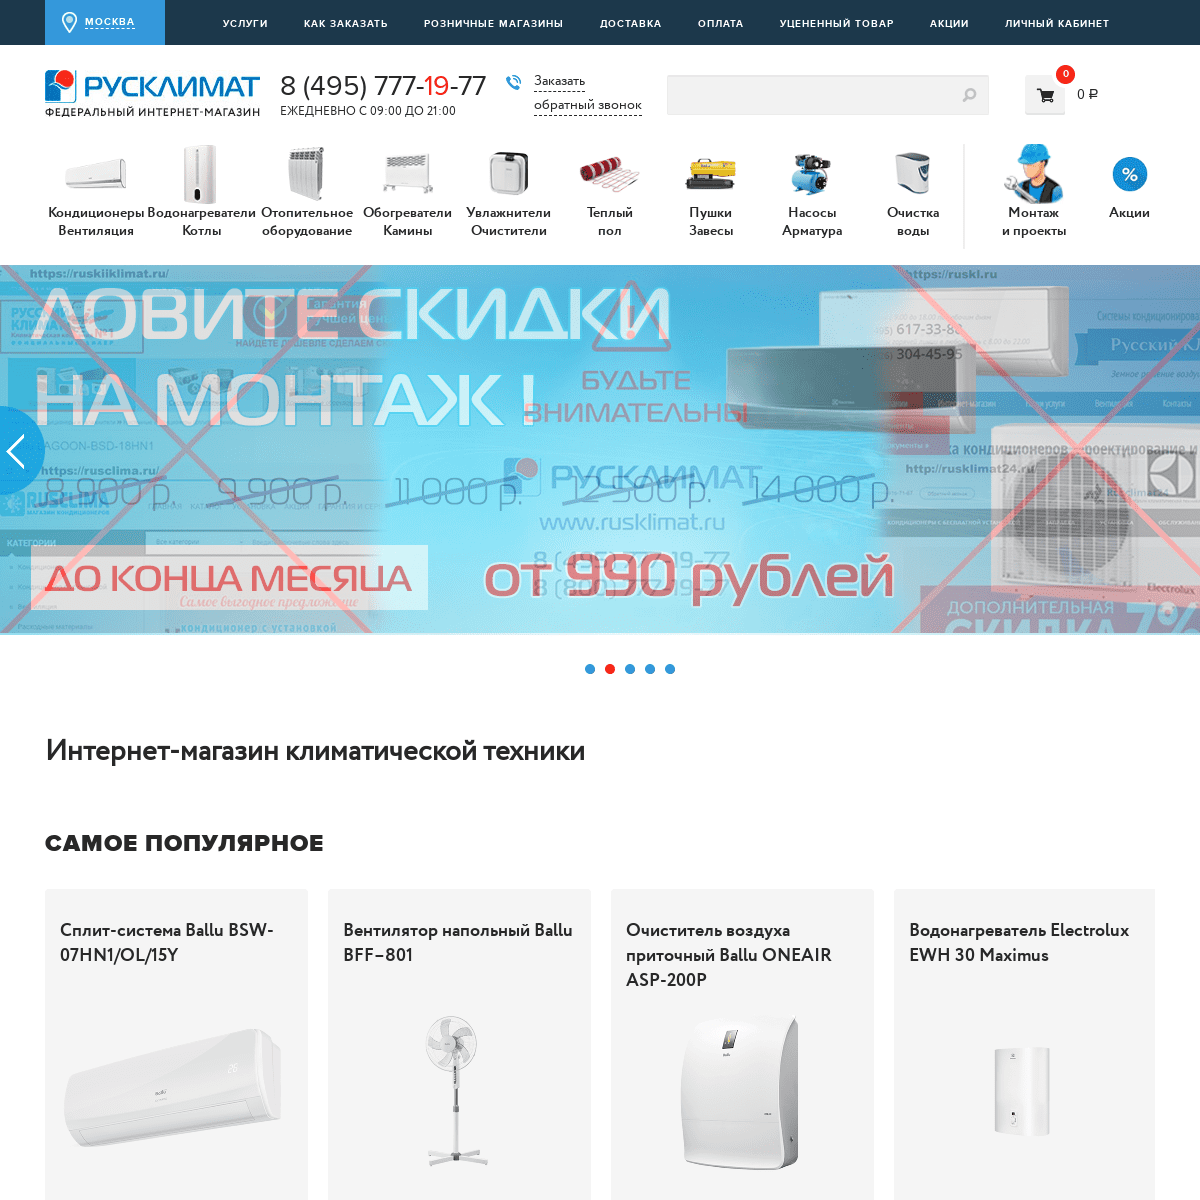 A complete backup of https://rusklimat.ru